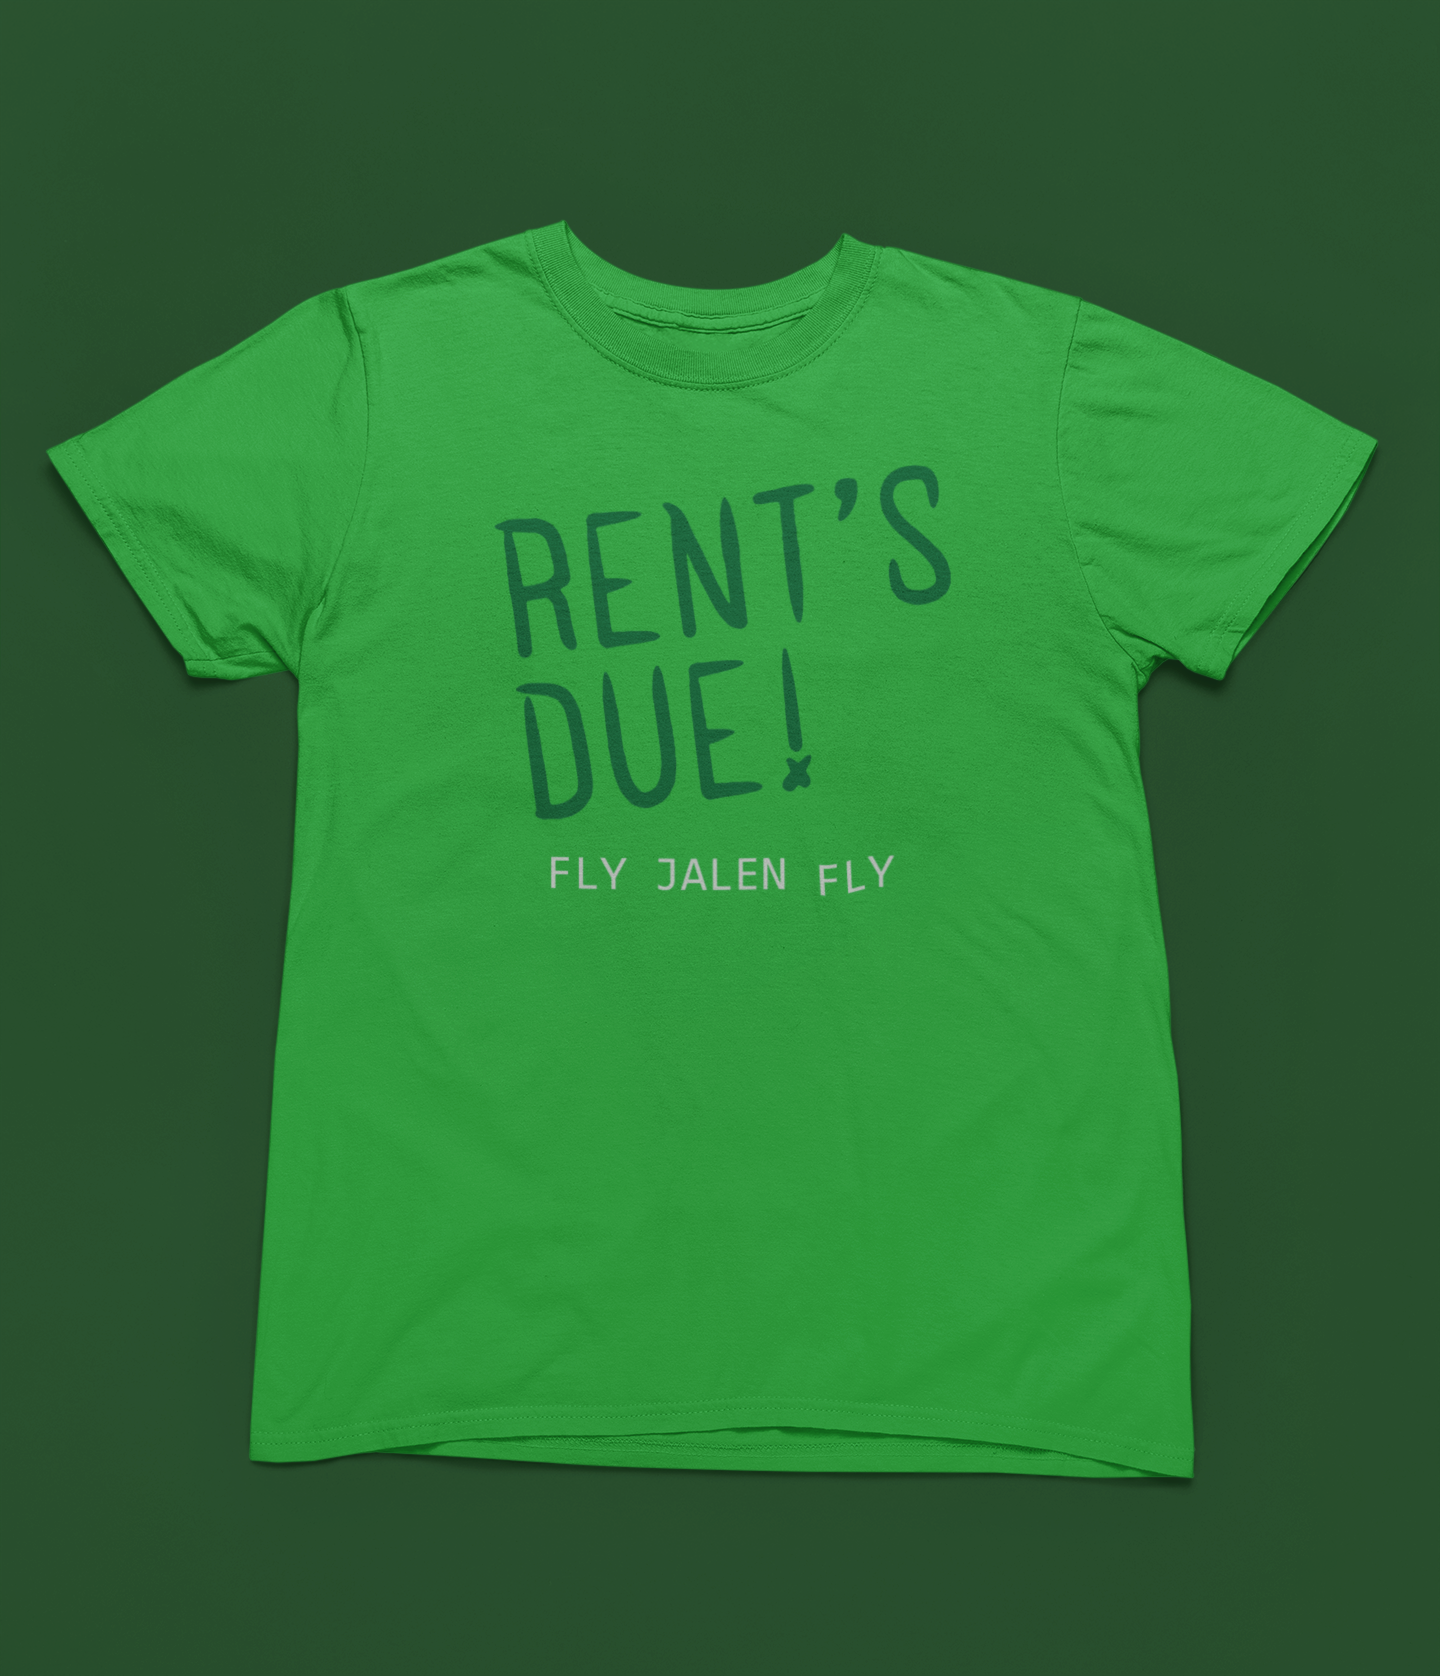 Rent's Due! - Premium T-shirt from HurtsAdelphia - Just $23.99! Shop now at HurtsAdelphia